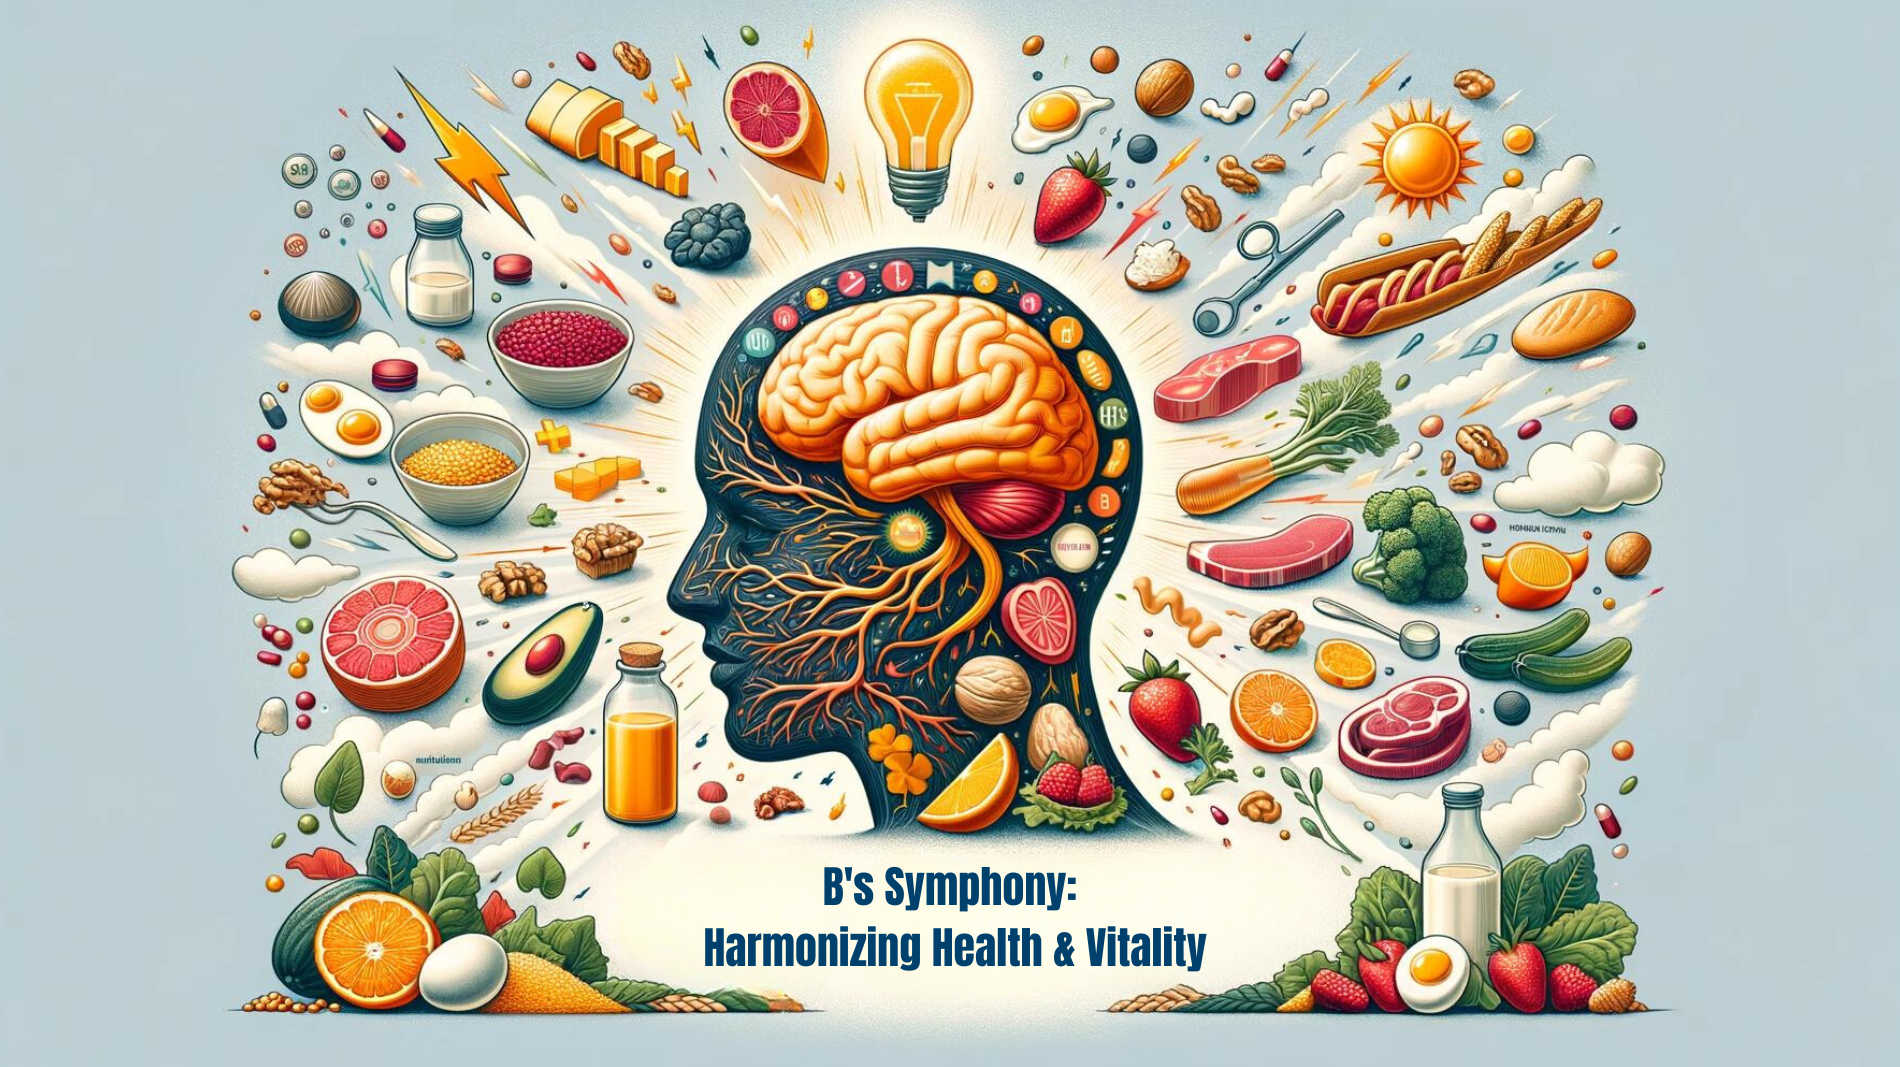 B's Symphony: Harmonizing Health & Vitality